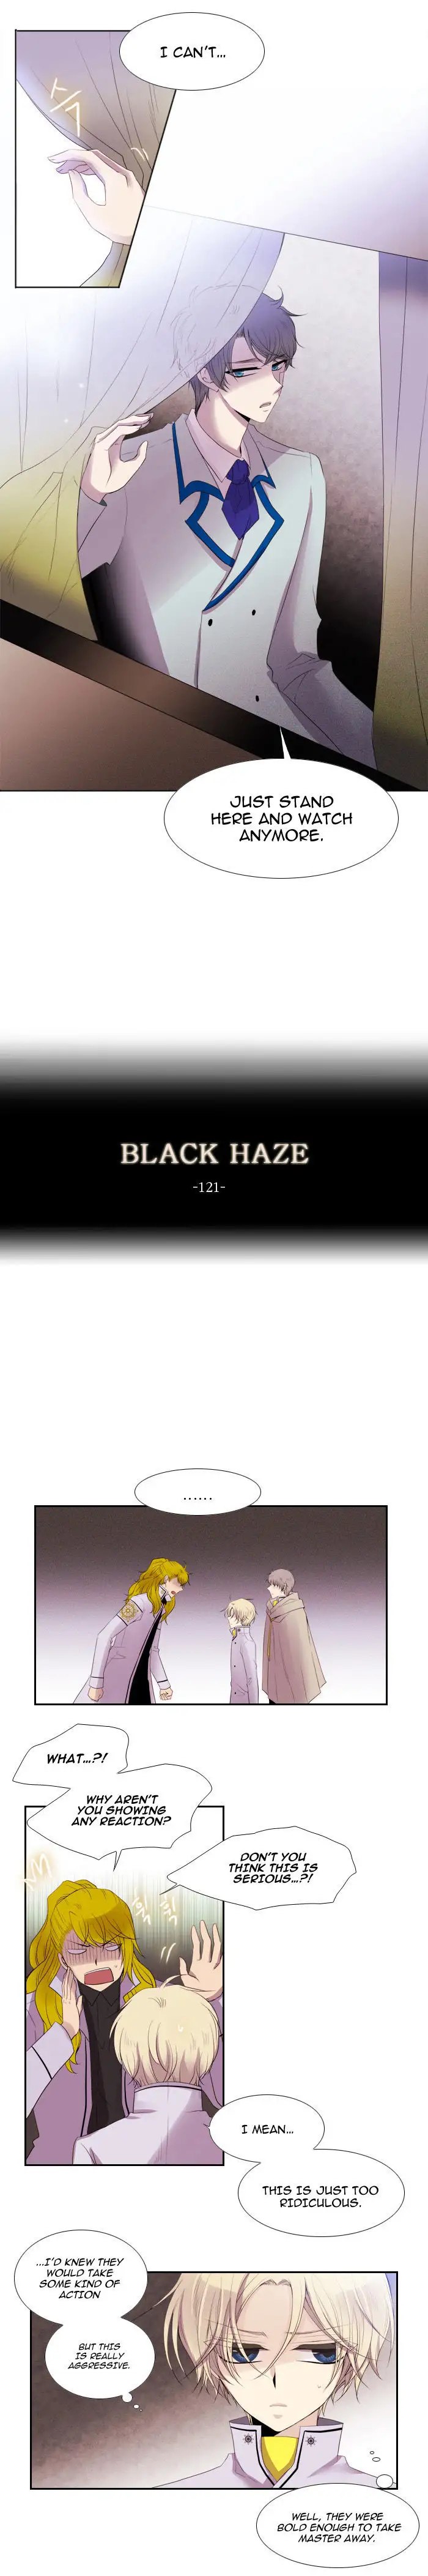 Black Haze - Chapter 121 Page 2